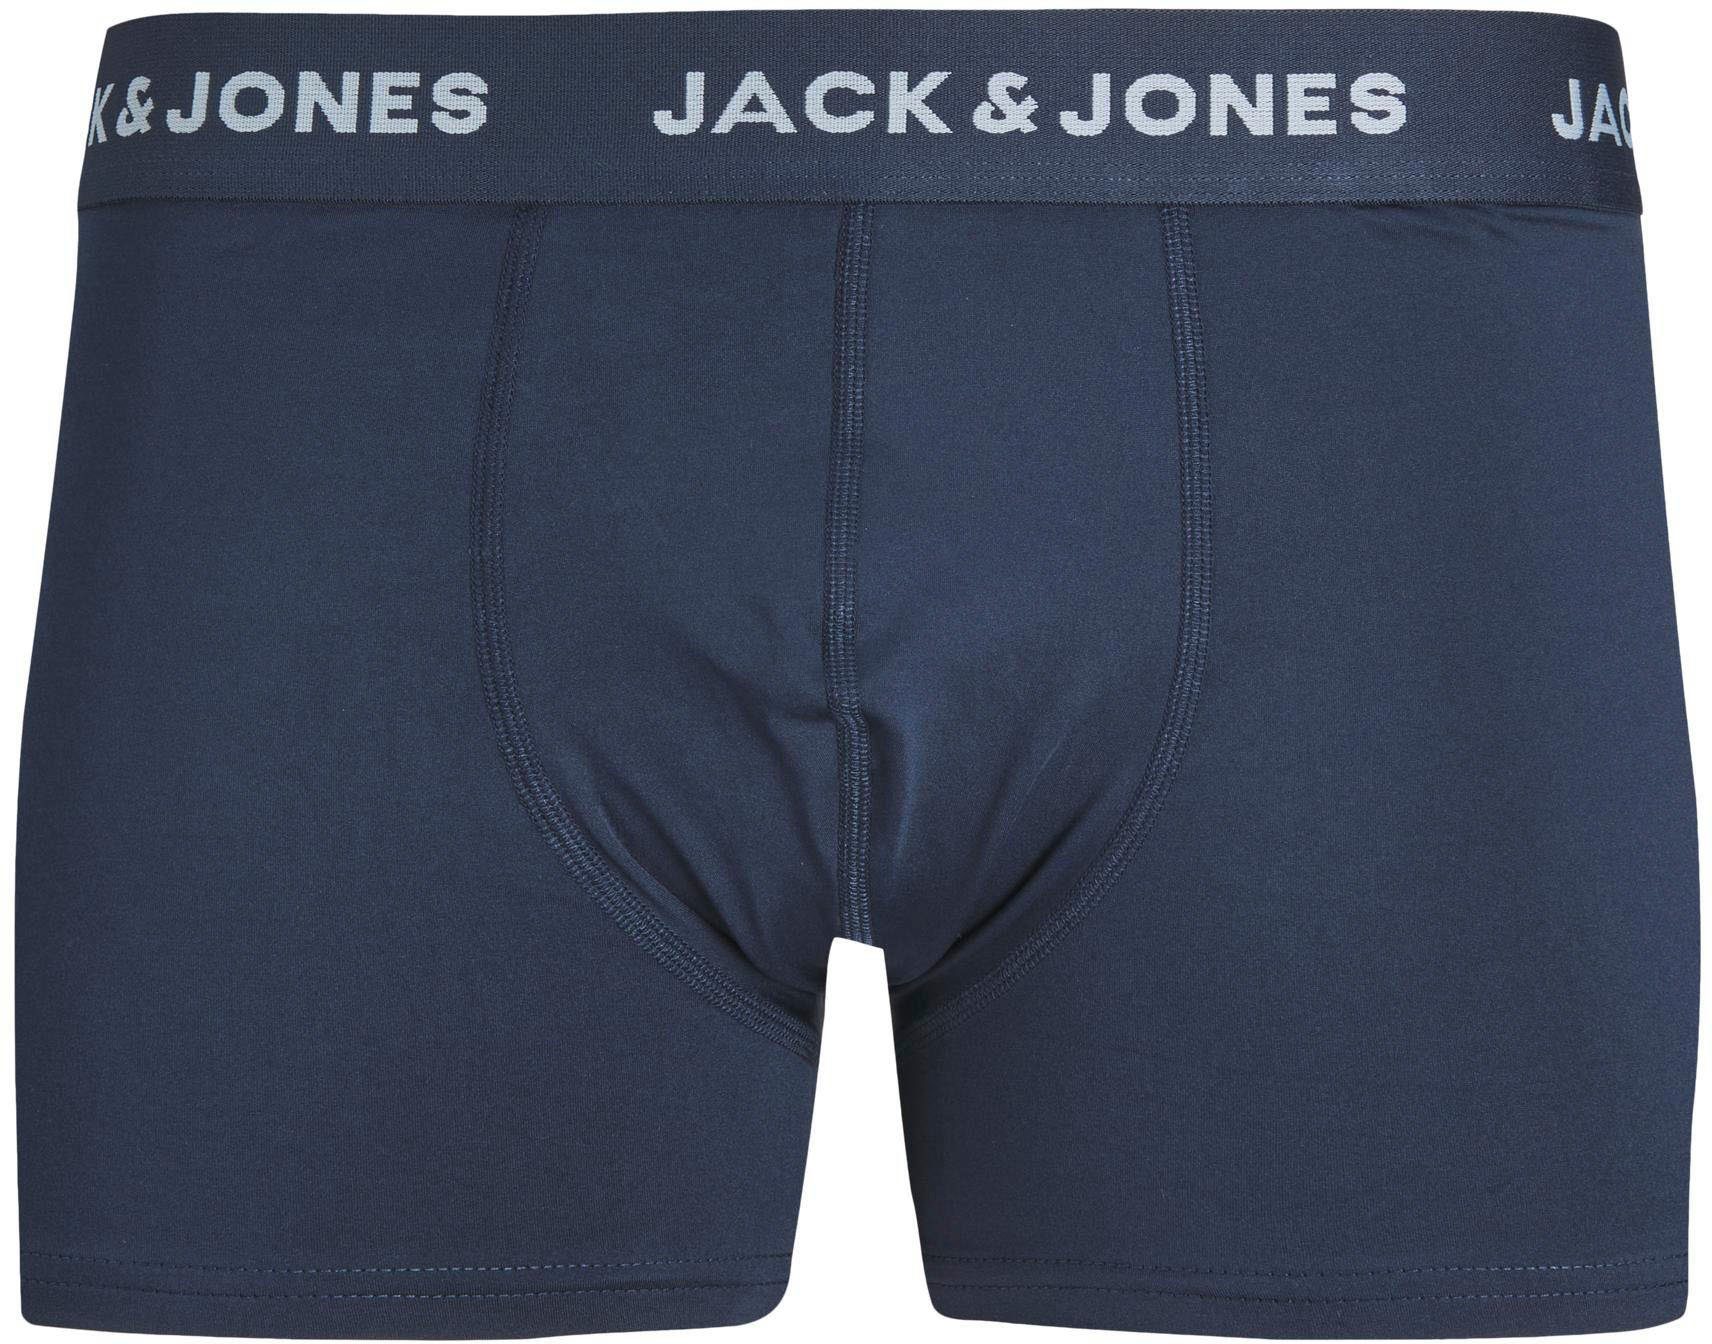 & (Packung, TRUN MICROFIBER JJ 3-St) Boxershorts JACFIESTA Jack Jones